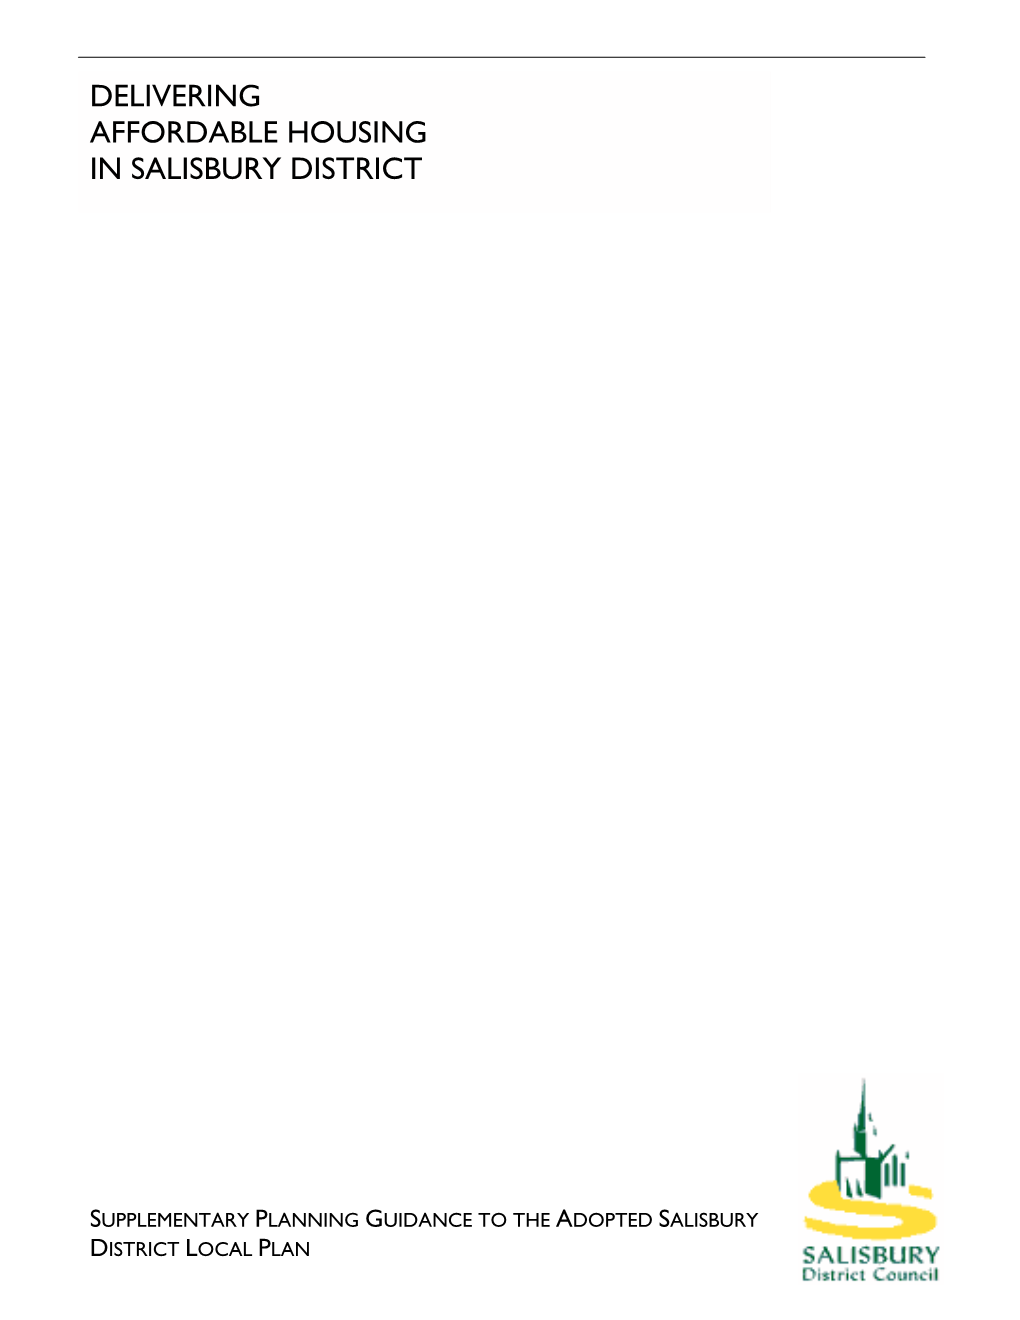 Delivering Affordable Housing in Salisbury District (Adoption Version – Sept 2004)